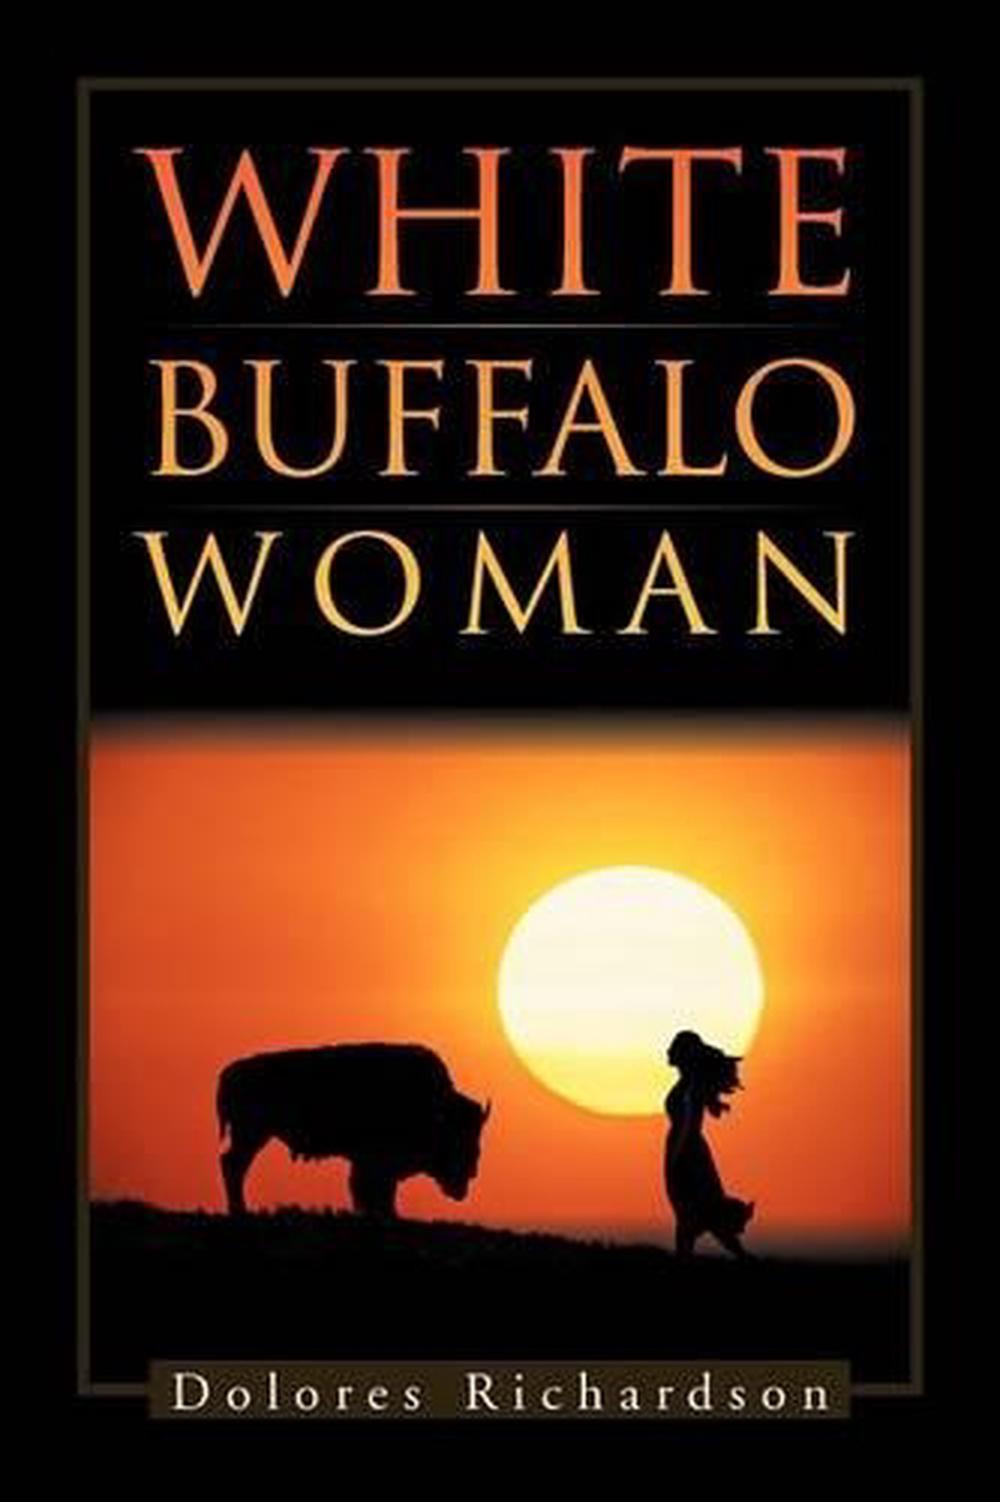 white buffalo woman summary